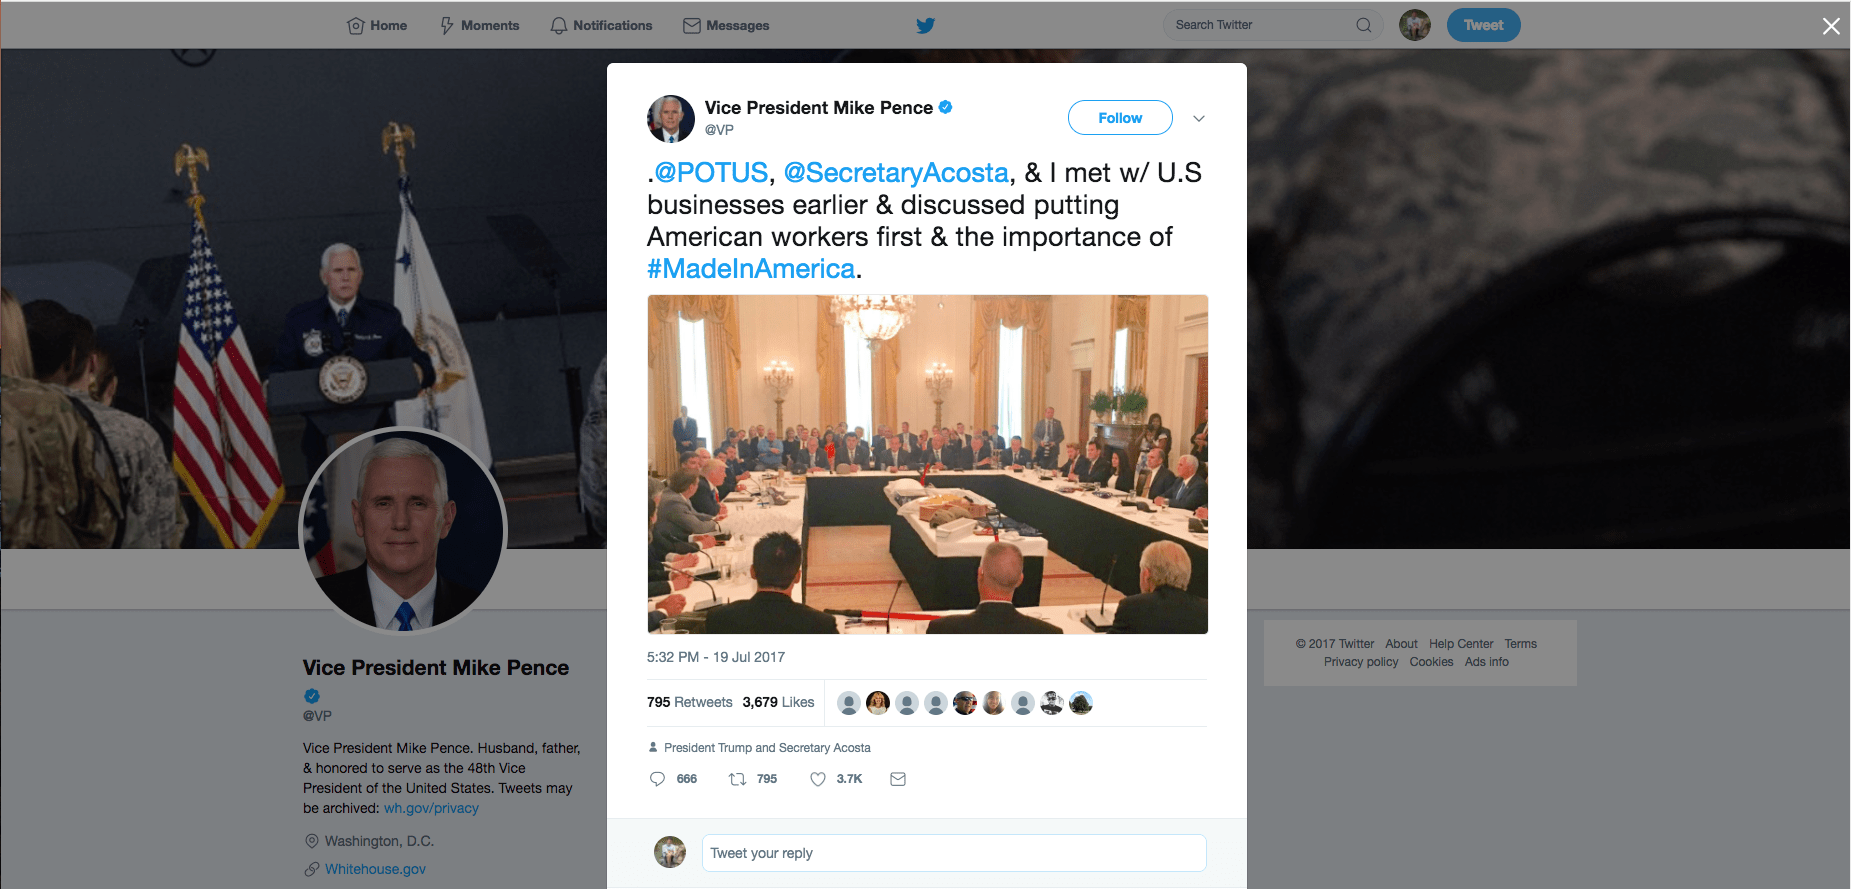 Vice President Mike Pence Tweet - Made in America Roundtable - Margarita Mendoza and Kurt Uhlir 14a